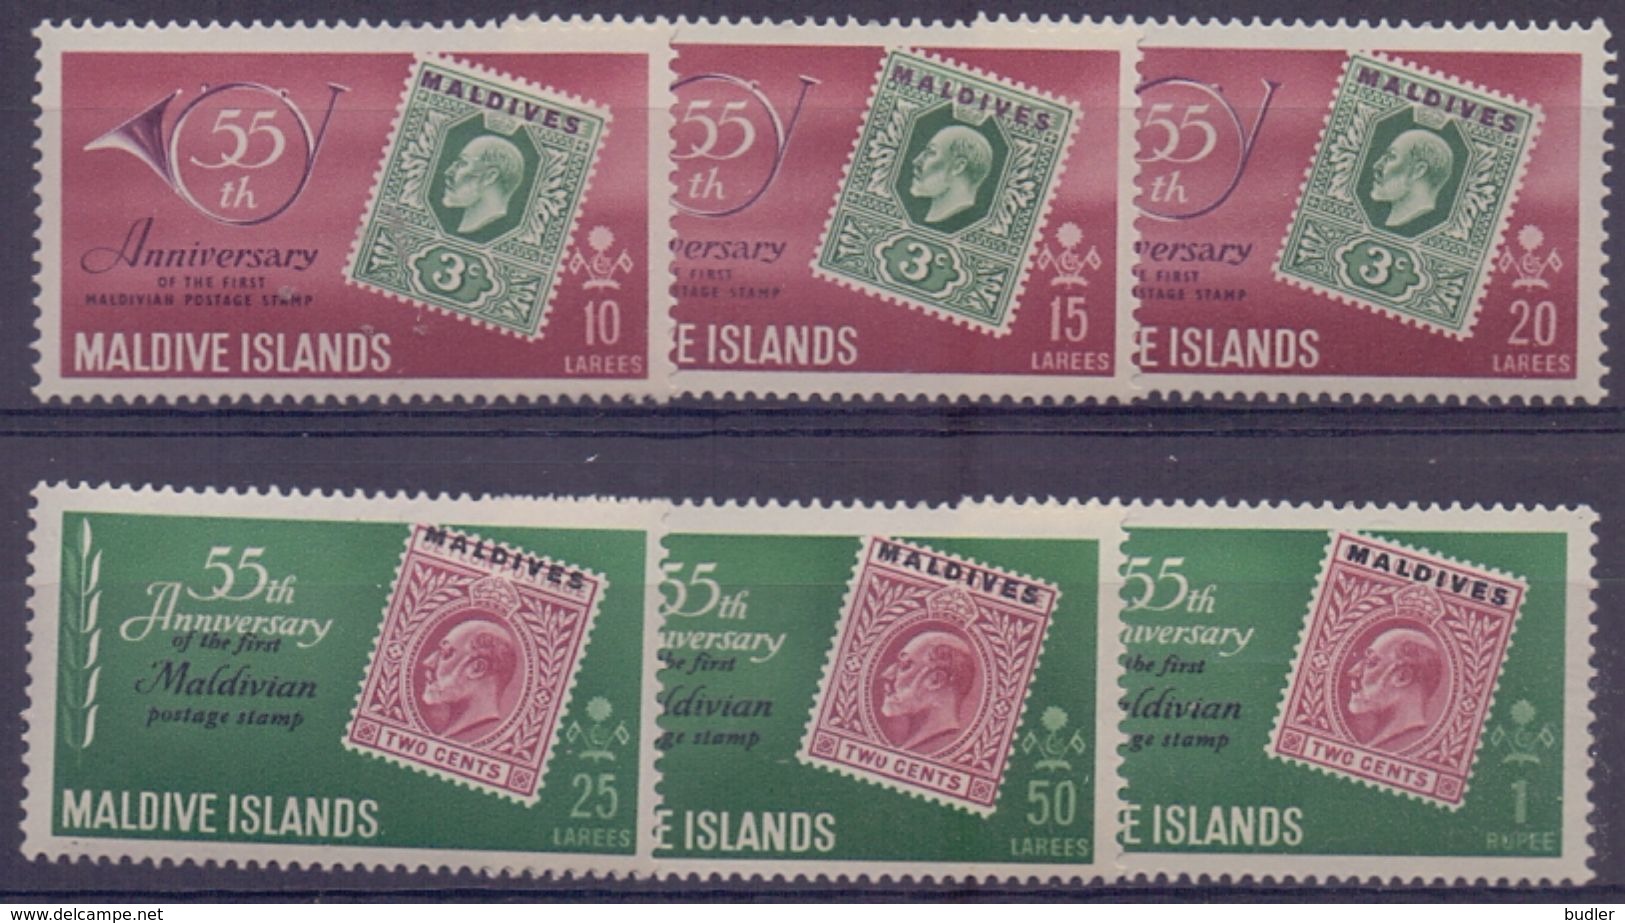 MALDIVE ISLANDS :1961: Y.77-86 Dentelled/neufs/MNH :  ## 55th Anniversary Of The First Maldivian Postage Stamp ## : - Maldives (...-1965)